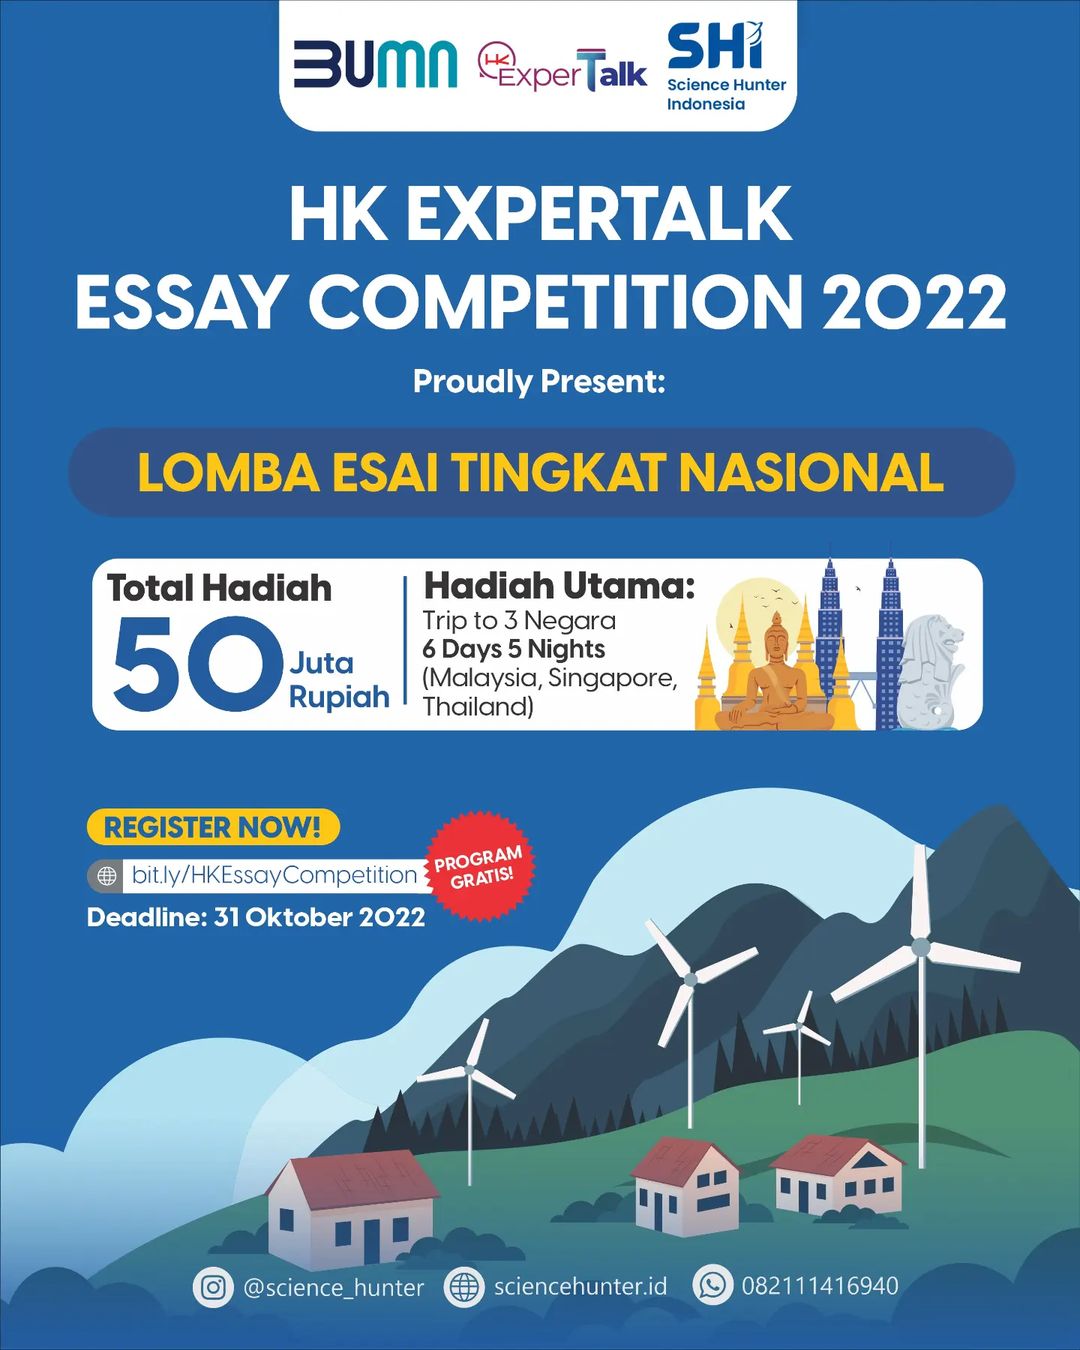 Gratis HK Expertalk Essay Competition 2022